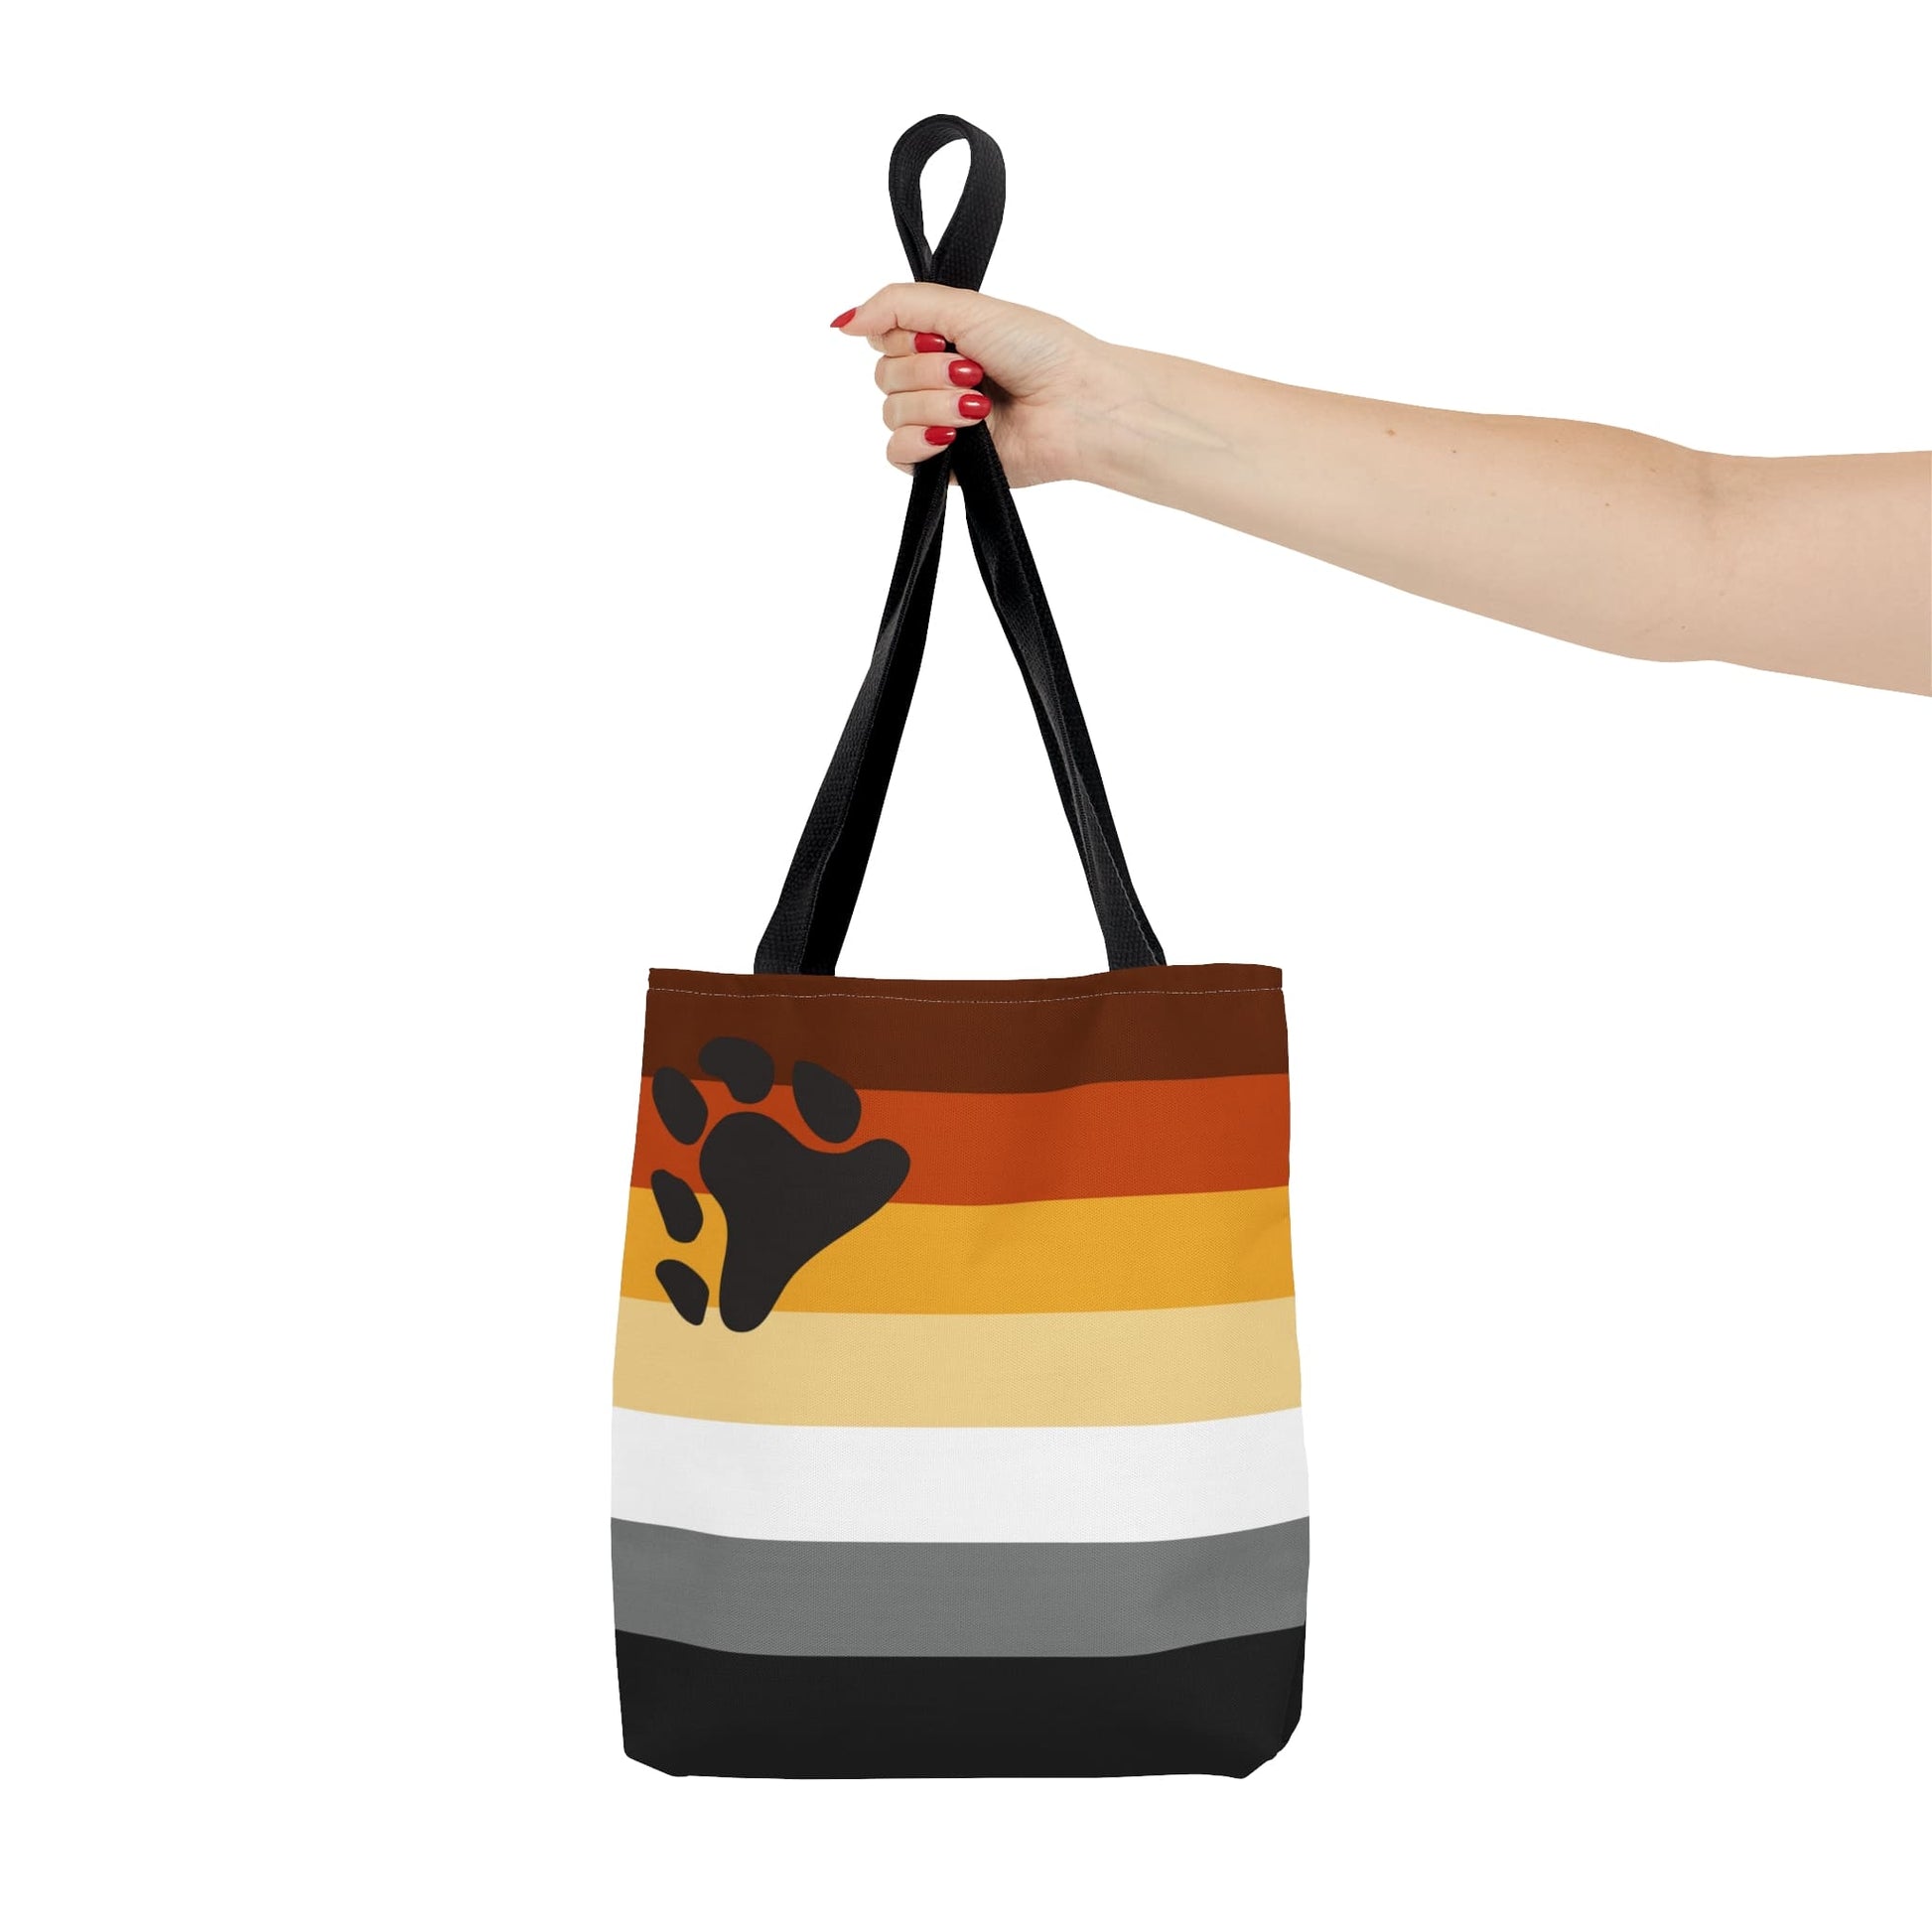 bear pride flag tote bag, small